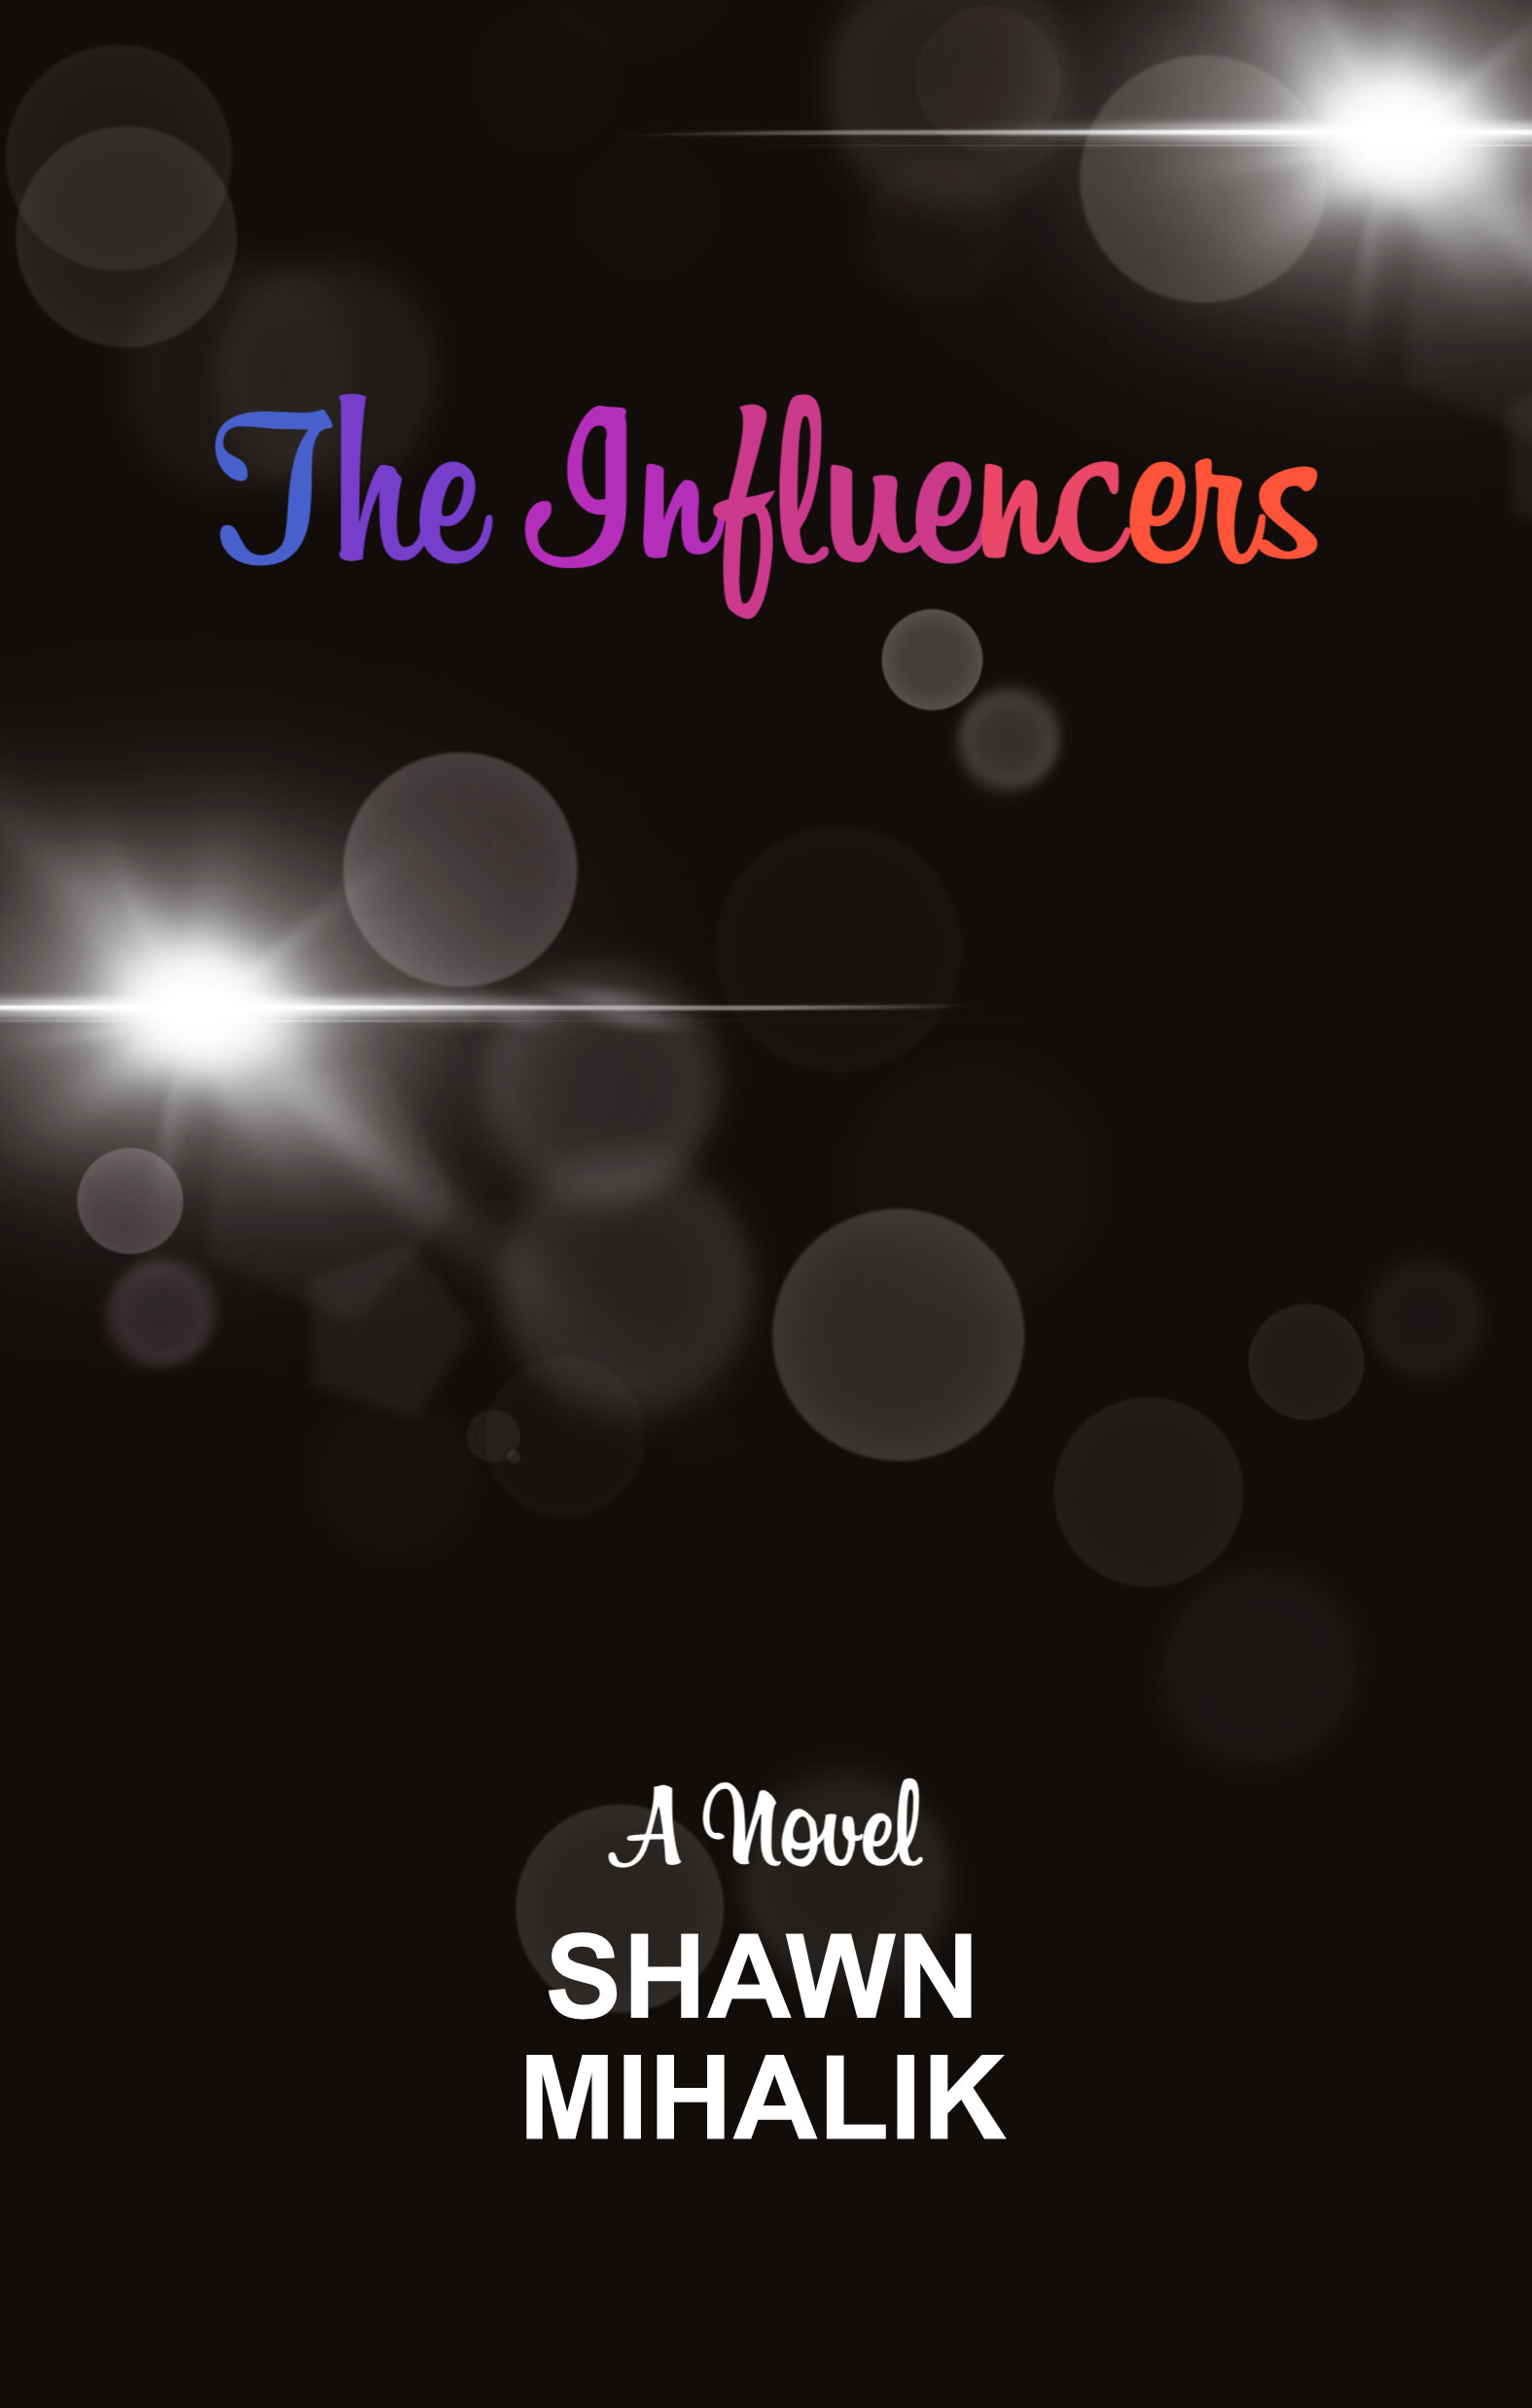   Title:  The Influencers   Publisher:  Asymmetrical Press   Release Date:  April 10, 2019   Genre:  Novel / Literary Fiction   Length:  229 pages   Paperback     Amazon    Ebook     Kindle  |  Apple Books  